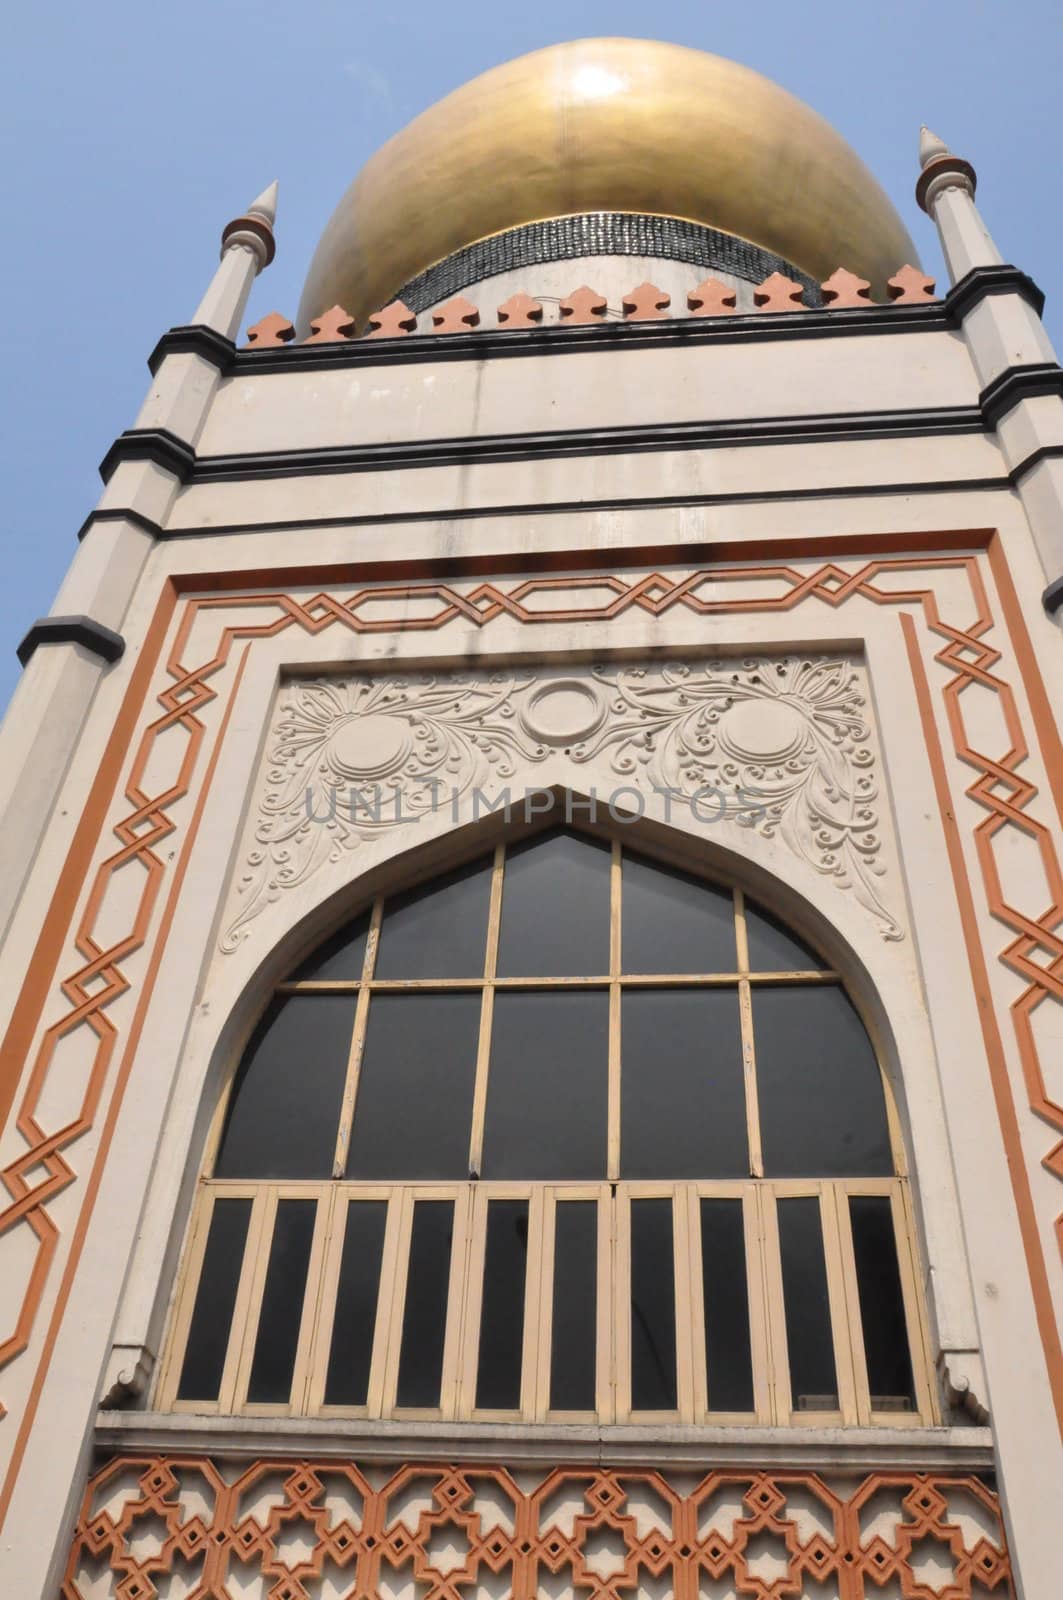 Sultan Mosque in Singapore by sainaniritu